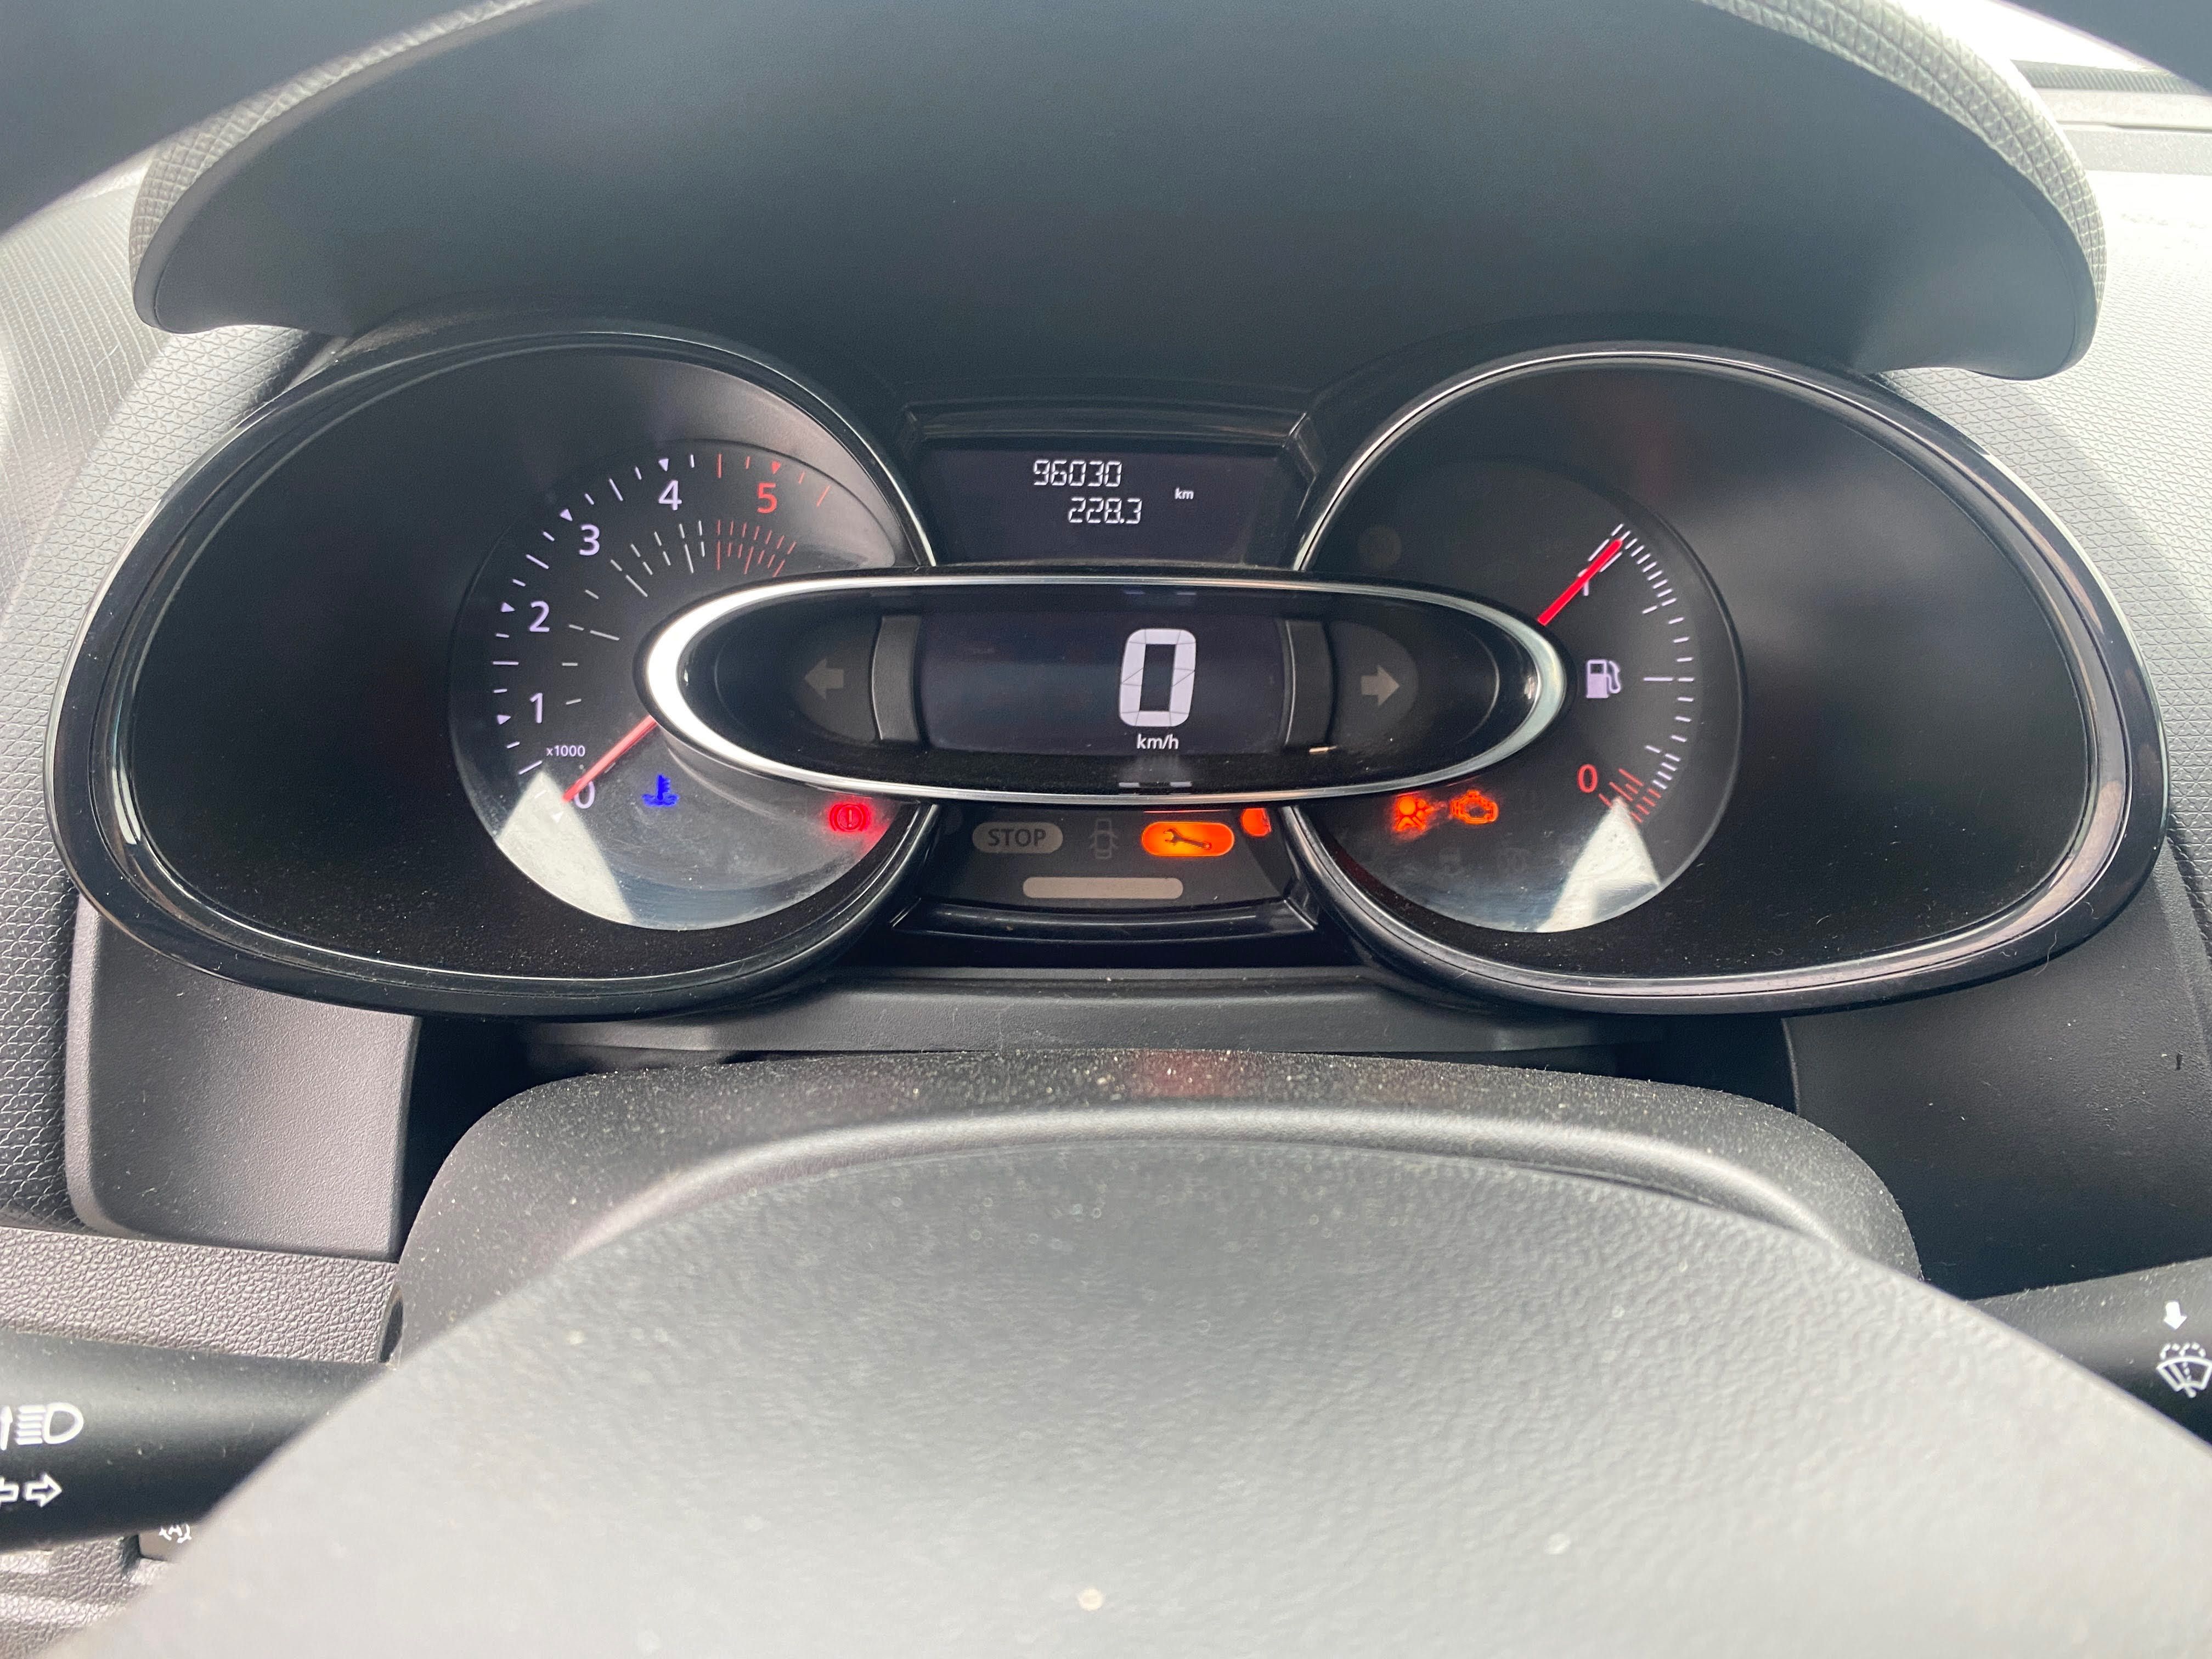 Renault Clio 1.5 DCI, 75 ph, 5sp., 96000 km, engine K9K628, 2018